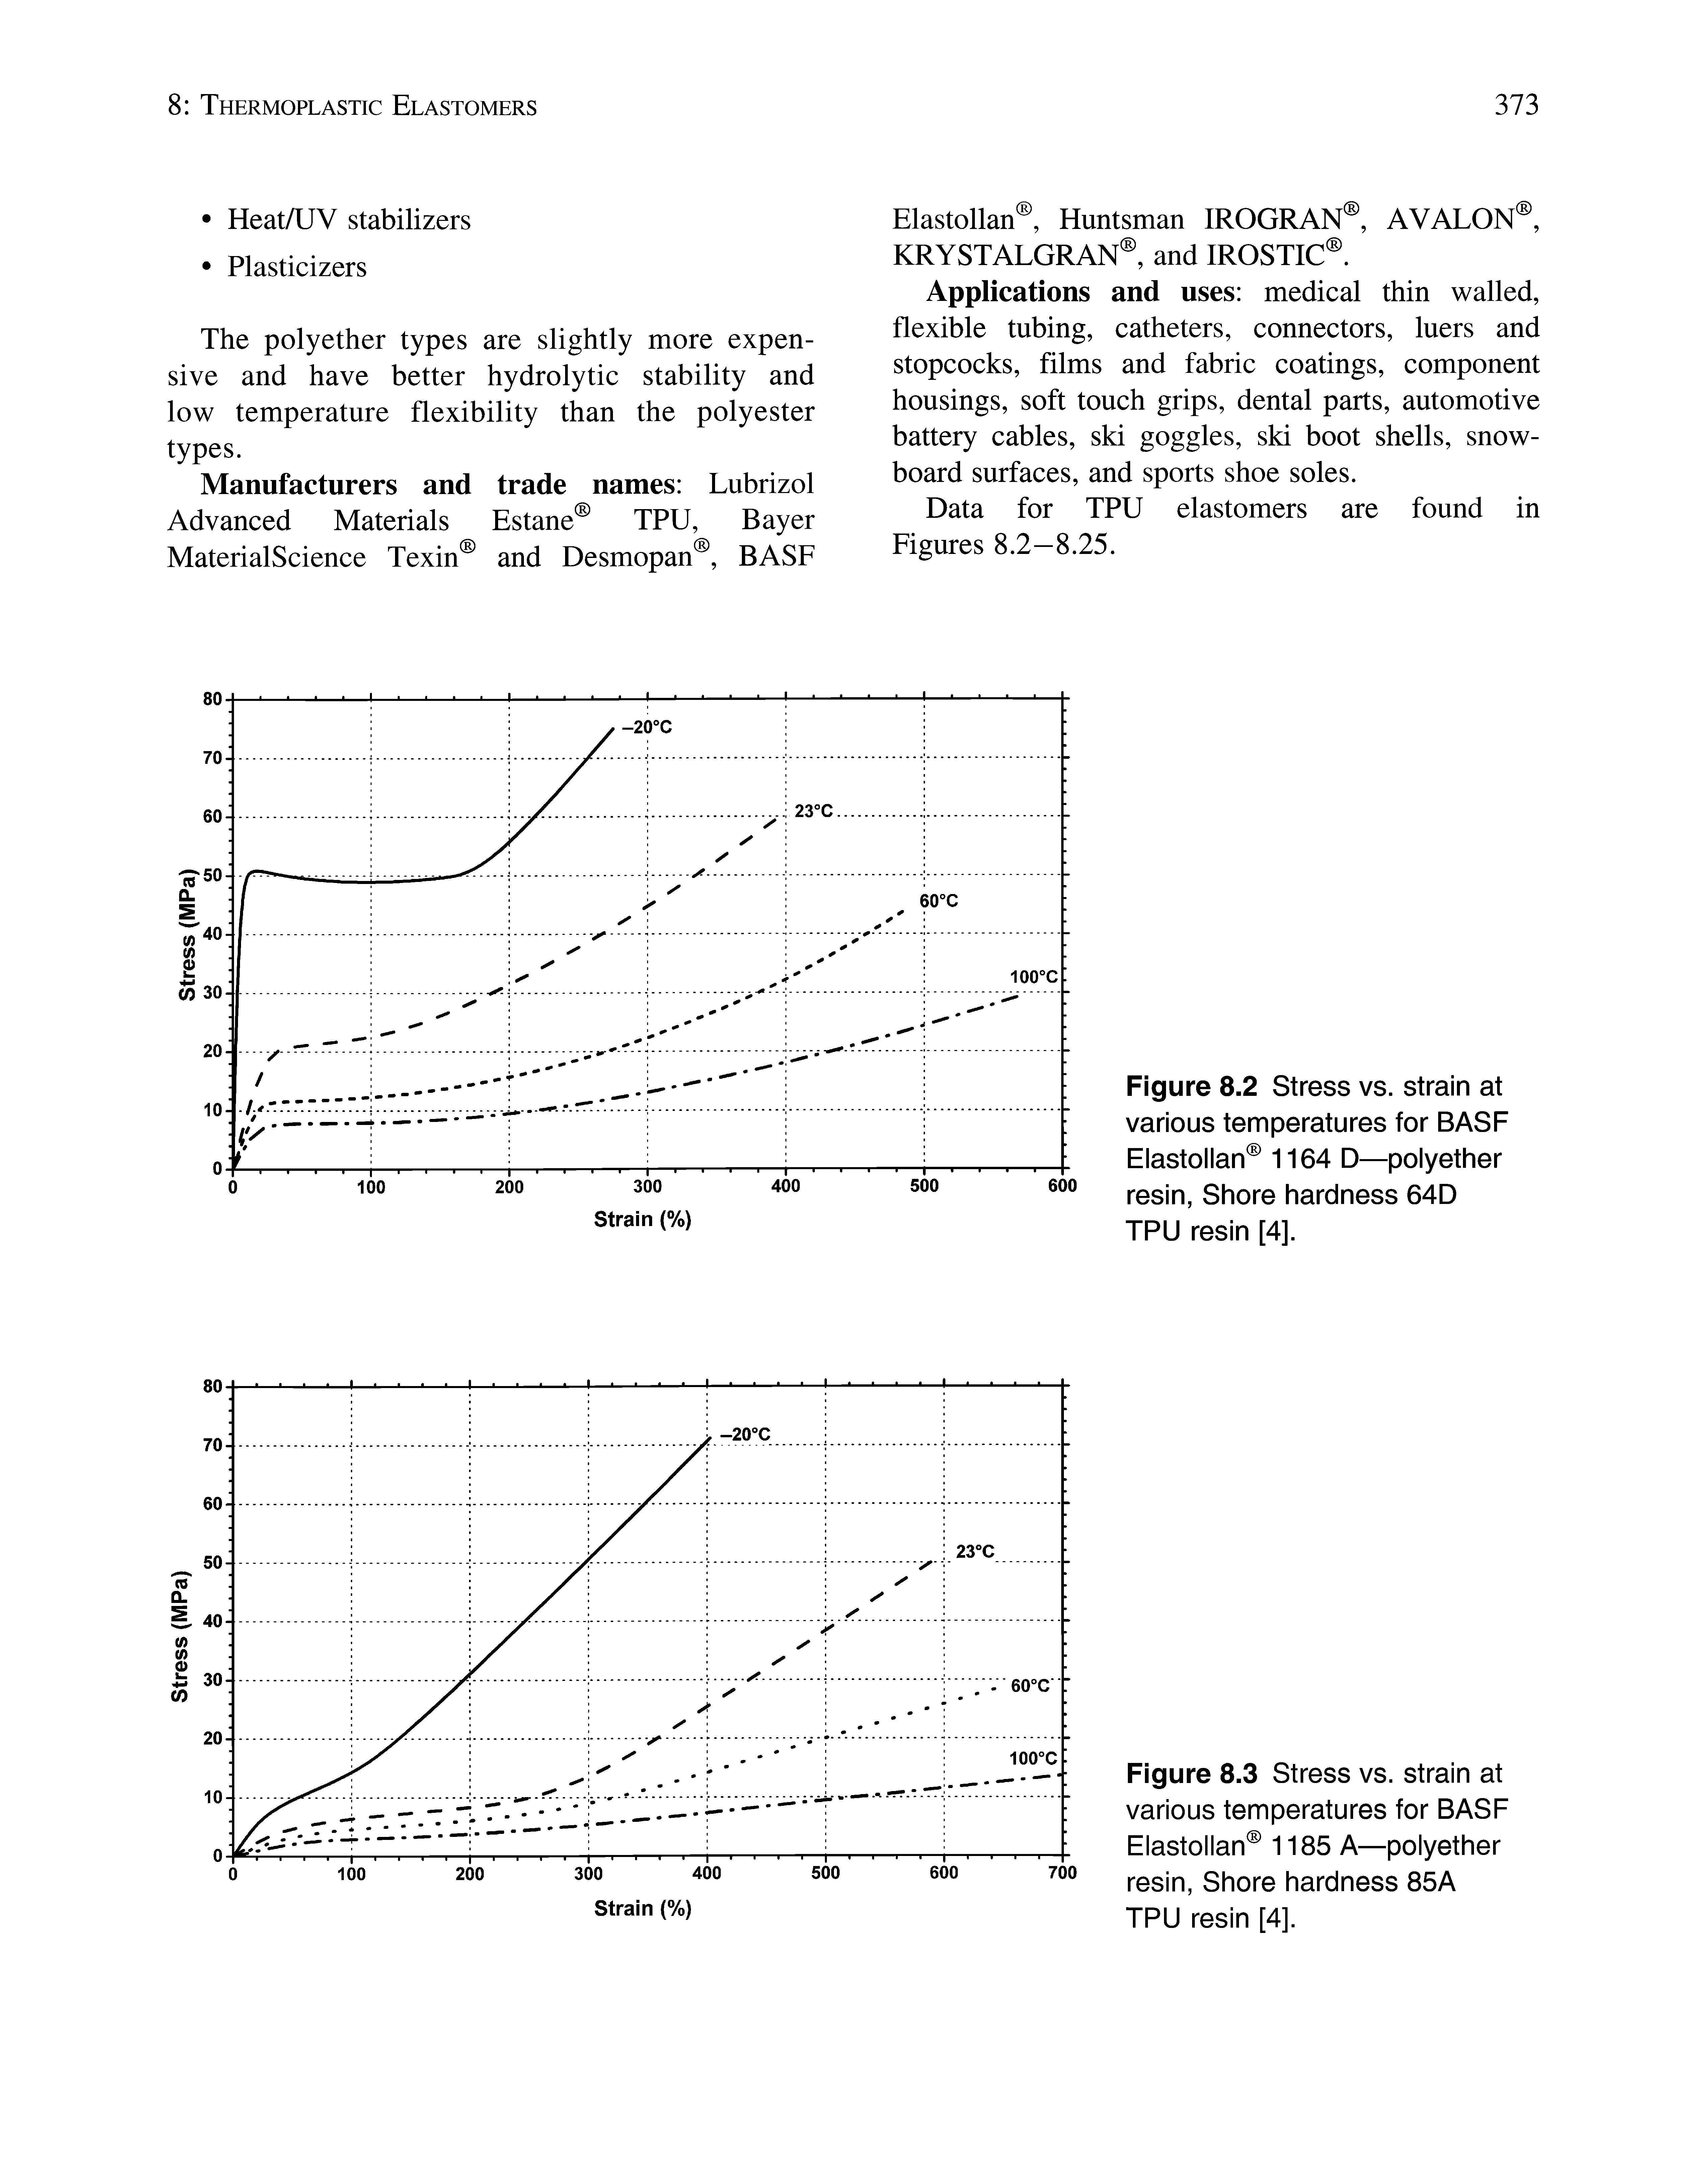 Figure 8.2 Stress vs. strain at various temperatures for BASF Elastollan 1164 D—polyether resin. Shore hardness 64D TPU resin [4].